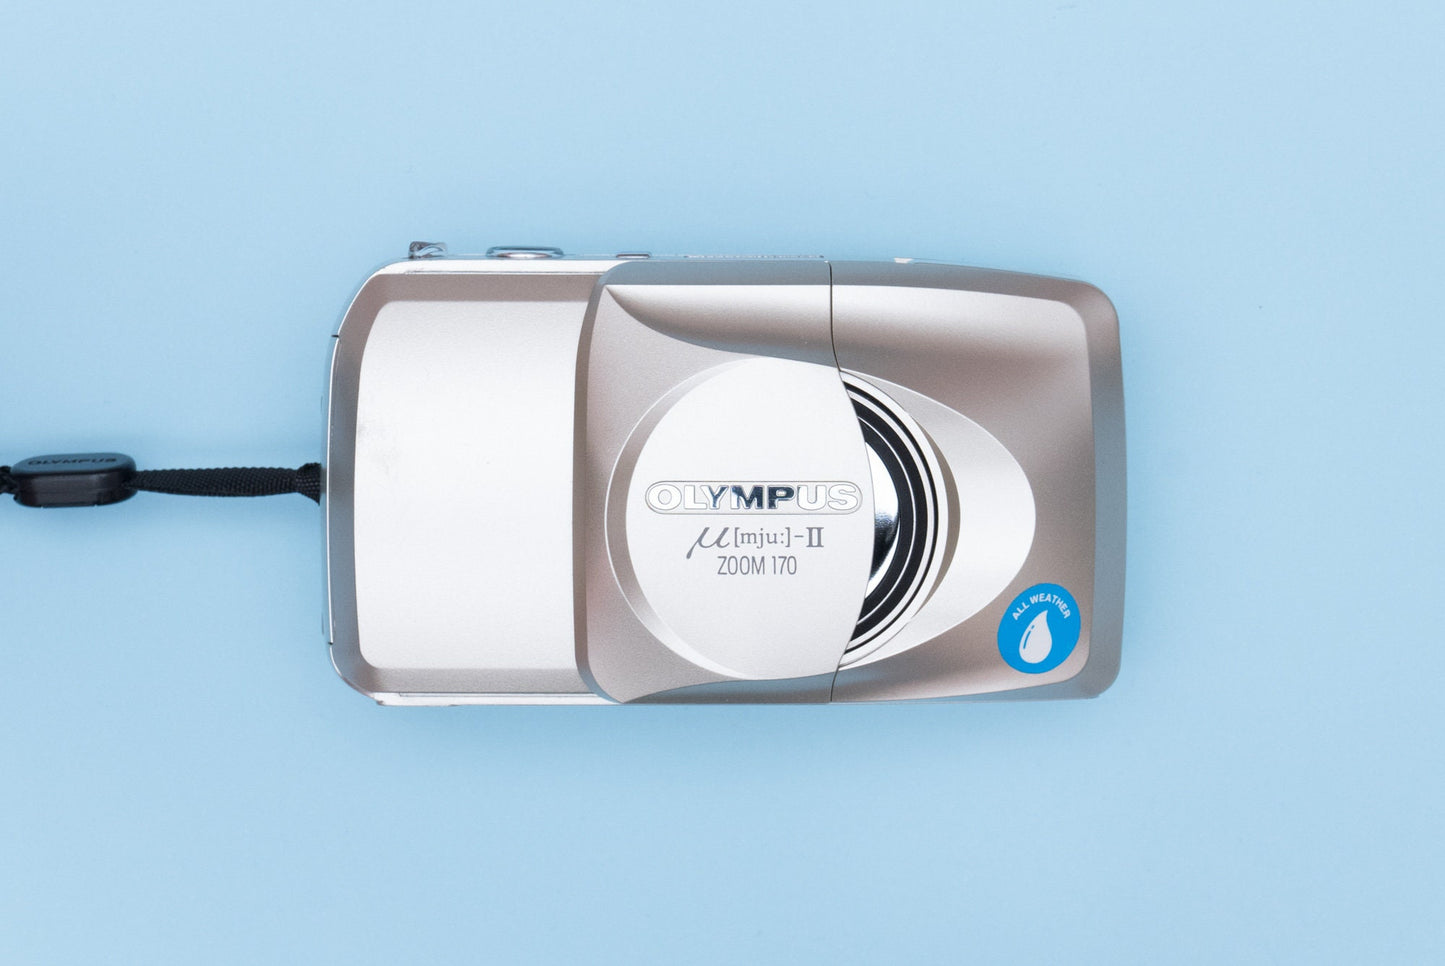 Olympus µ[mju:]-II Mju Zoom 170 Stylus Epic Compact 35mm Point and Shoot Film Camera